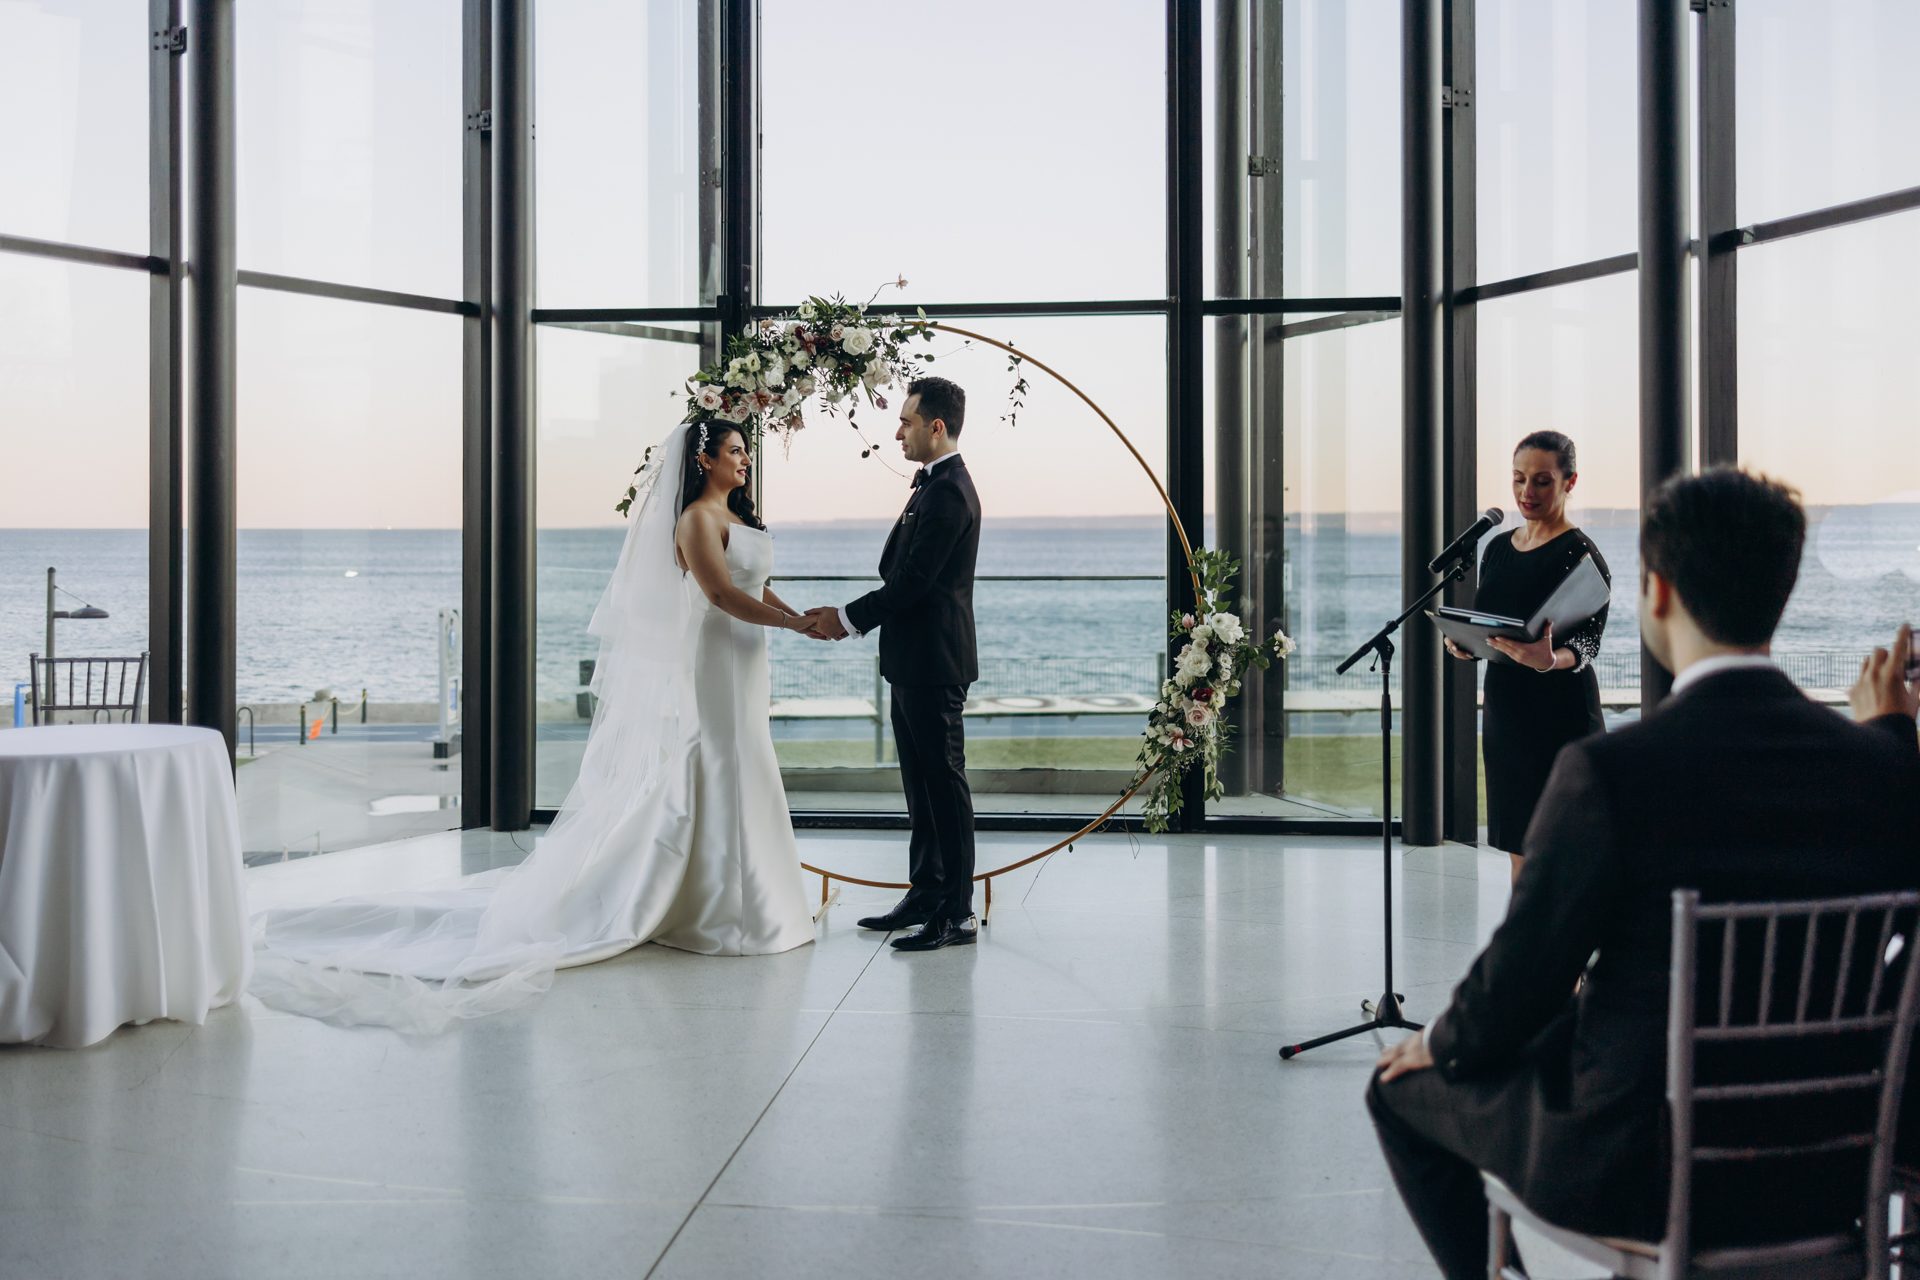 Spencers on the Waterfront weddings  | Astora studio